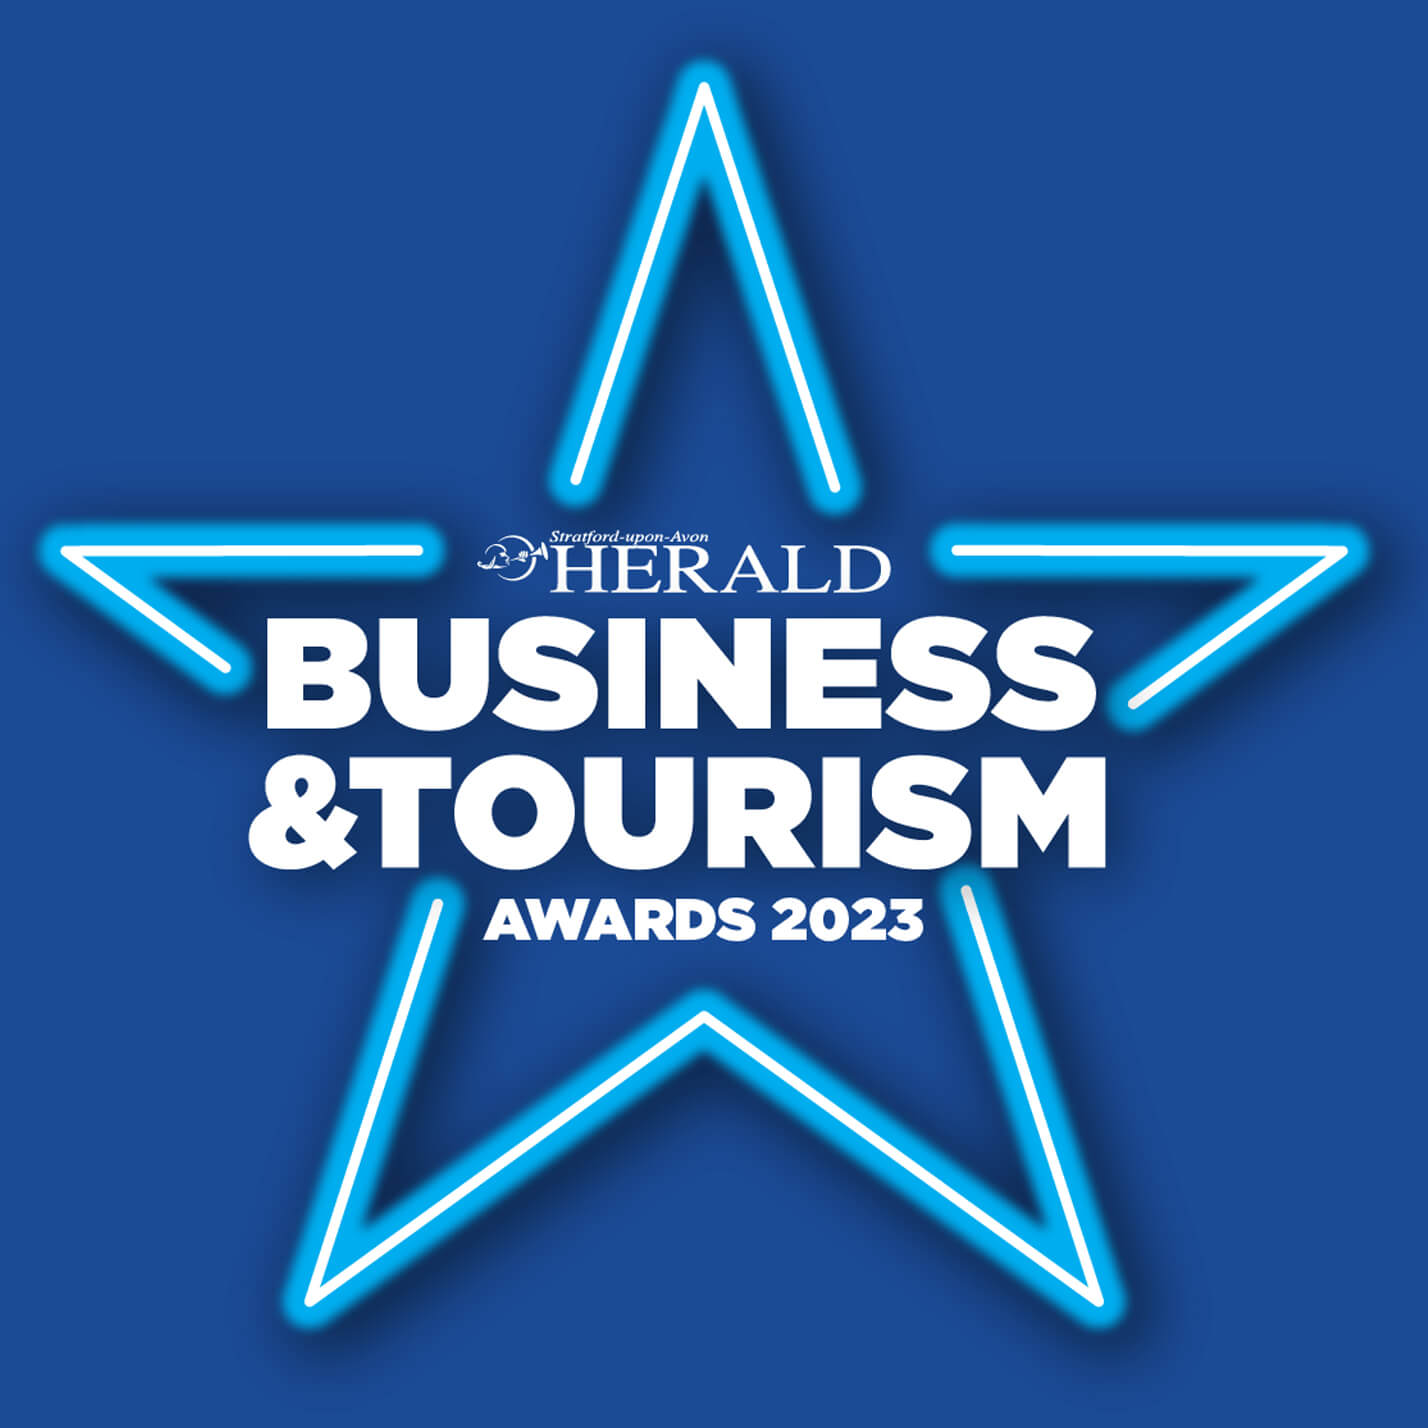 Stratford Business Awards